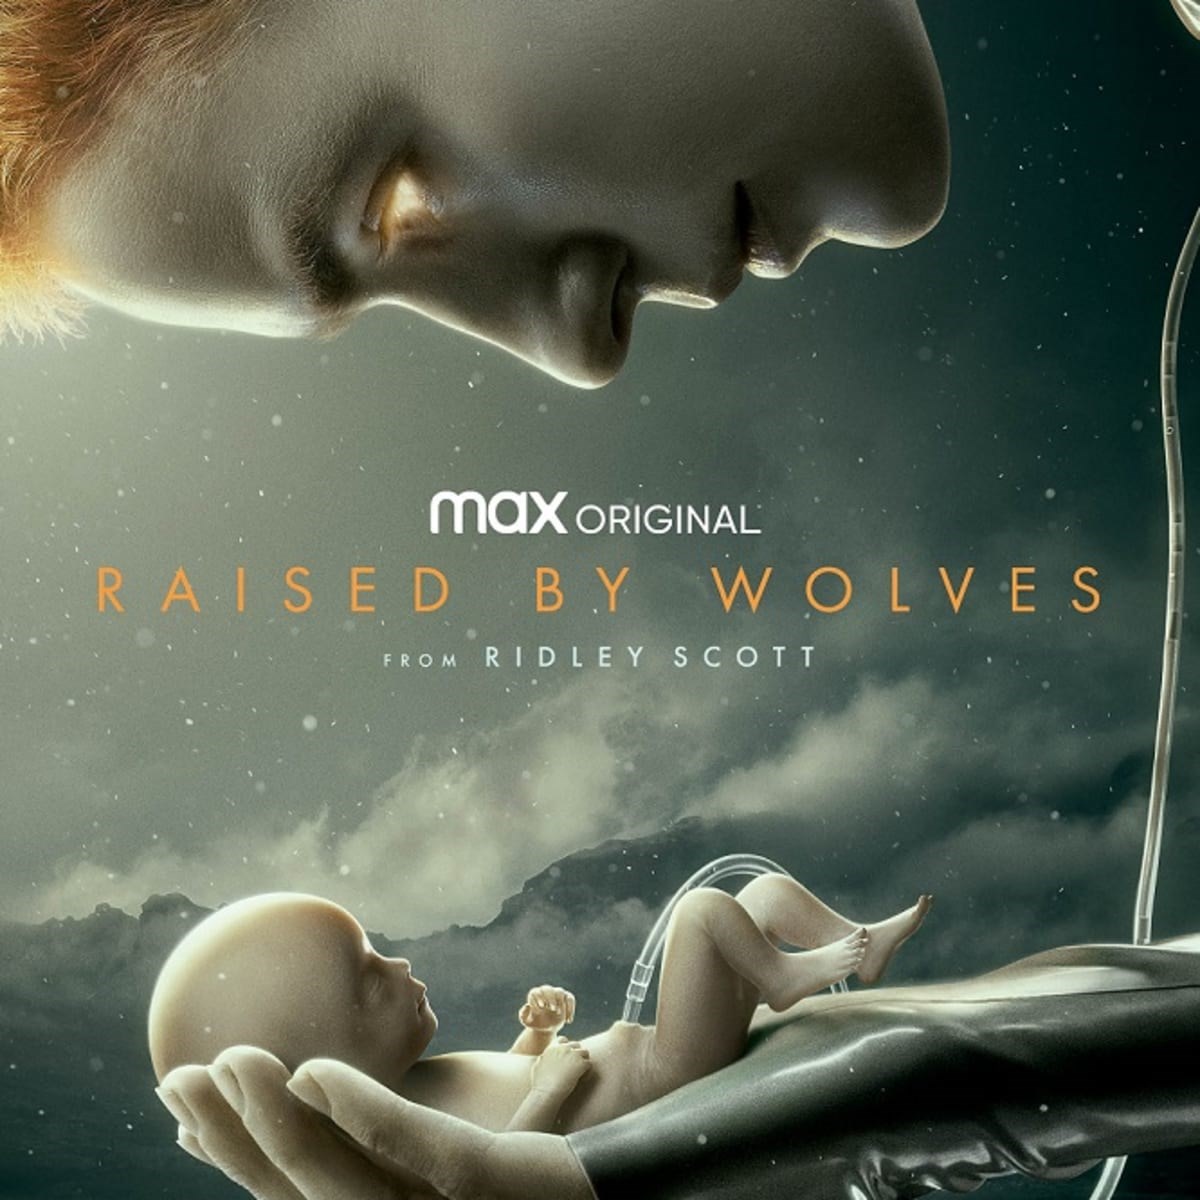 Ridley Scott imzalı HBO dizisi Raised by Wolves’tan resmi fragman geldi